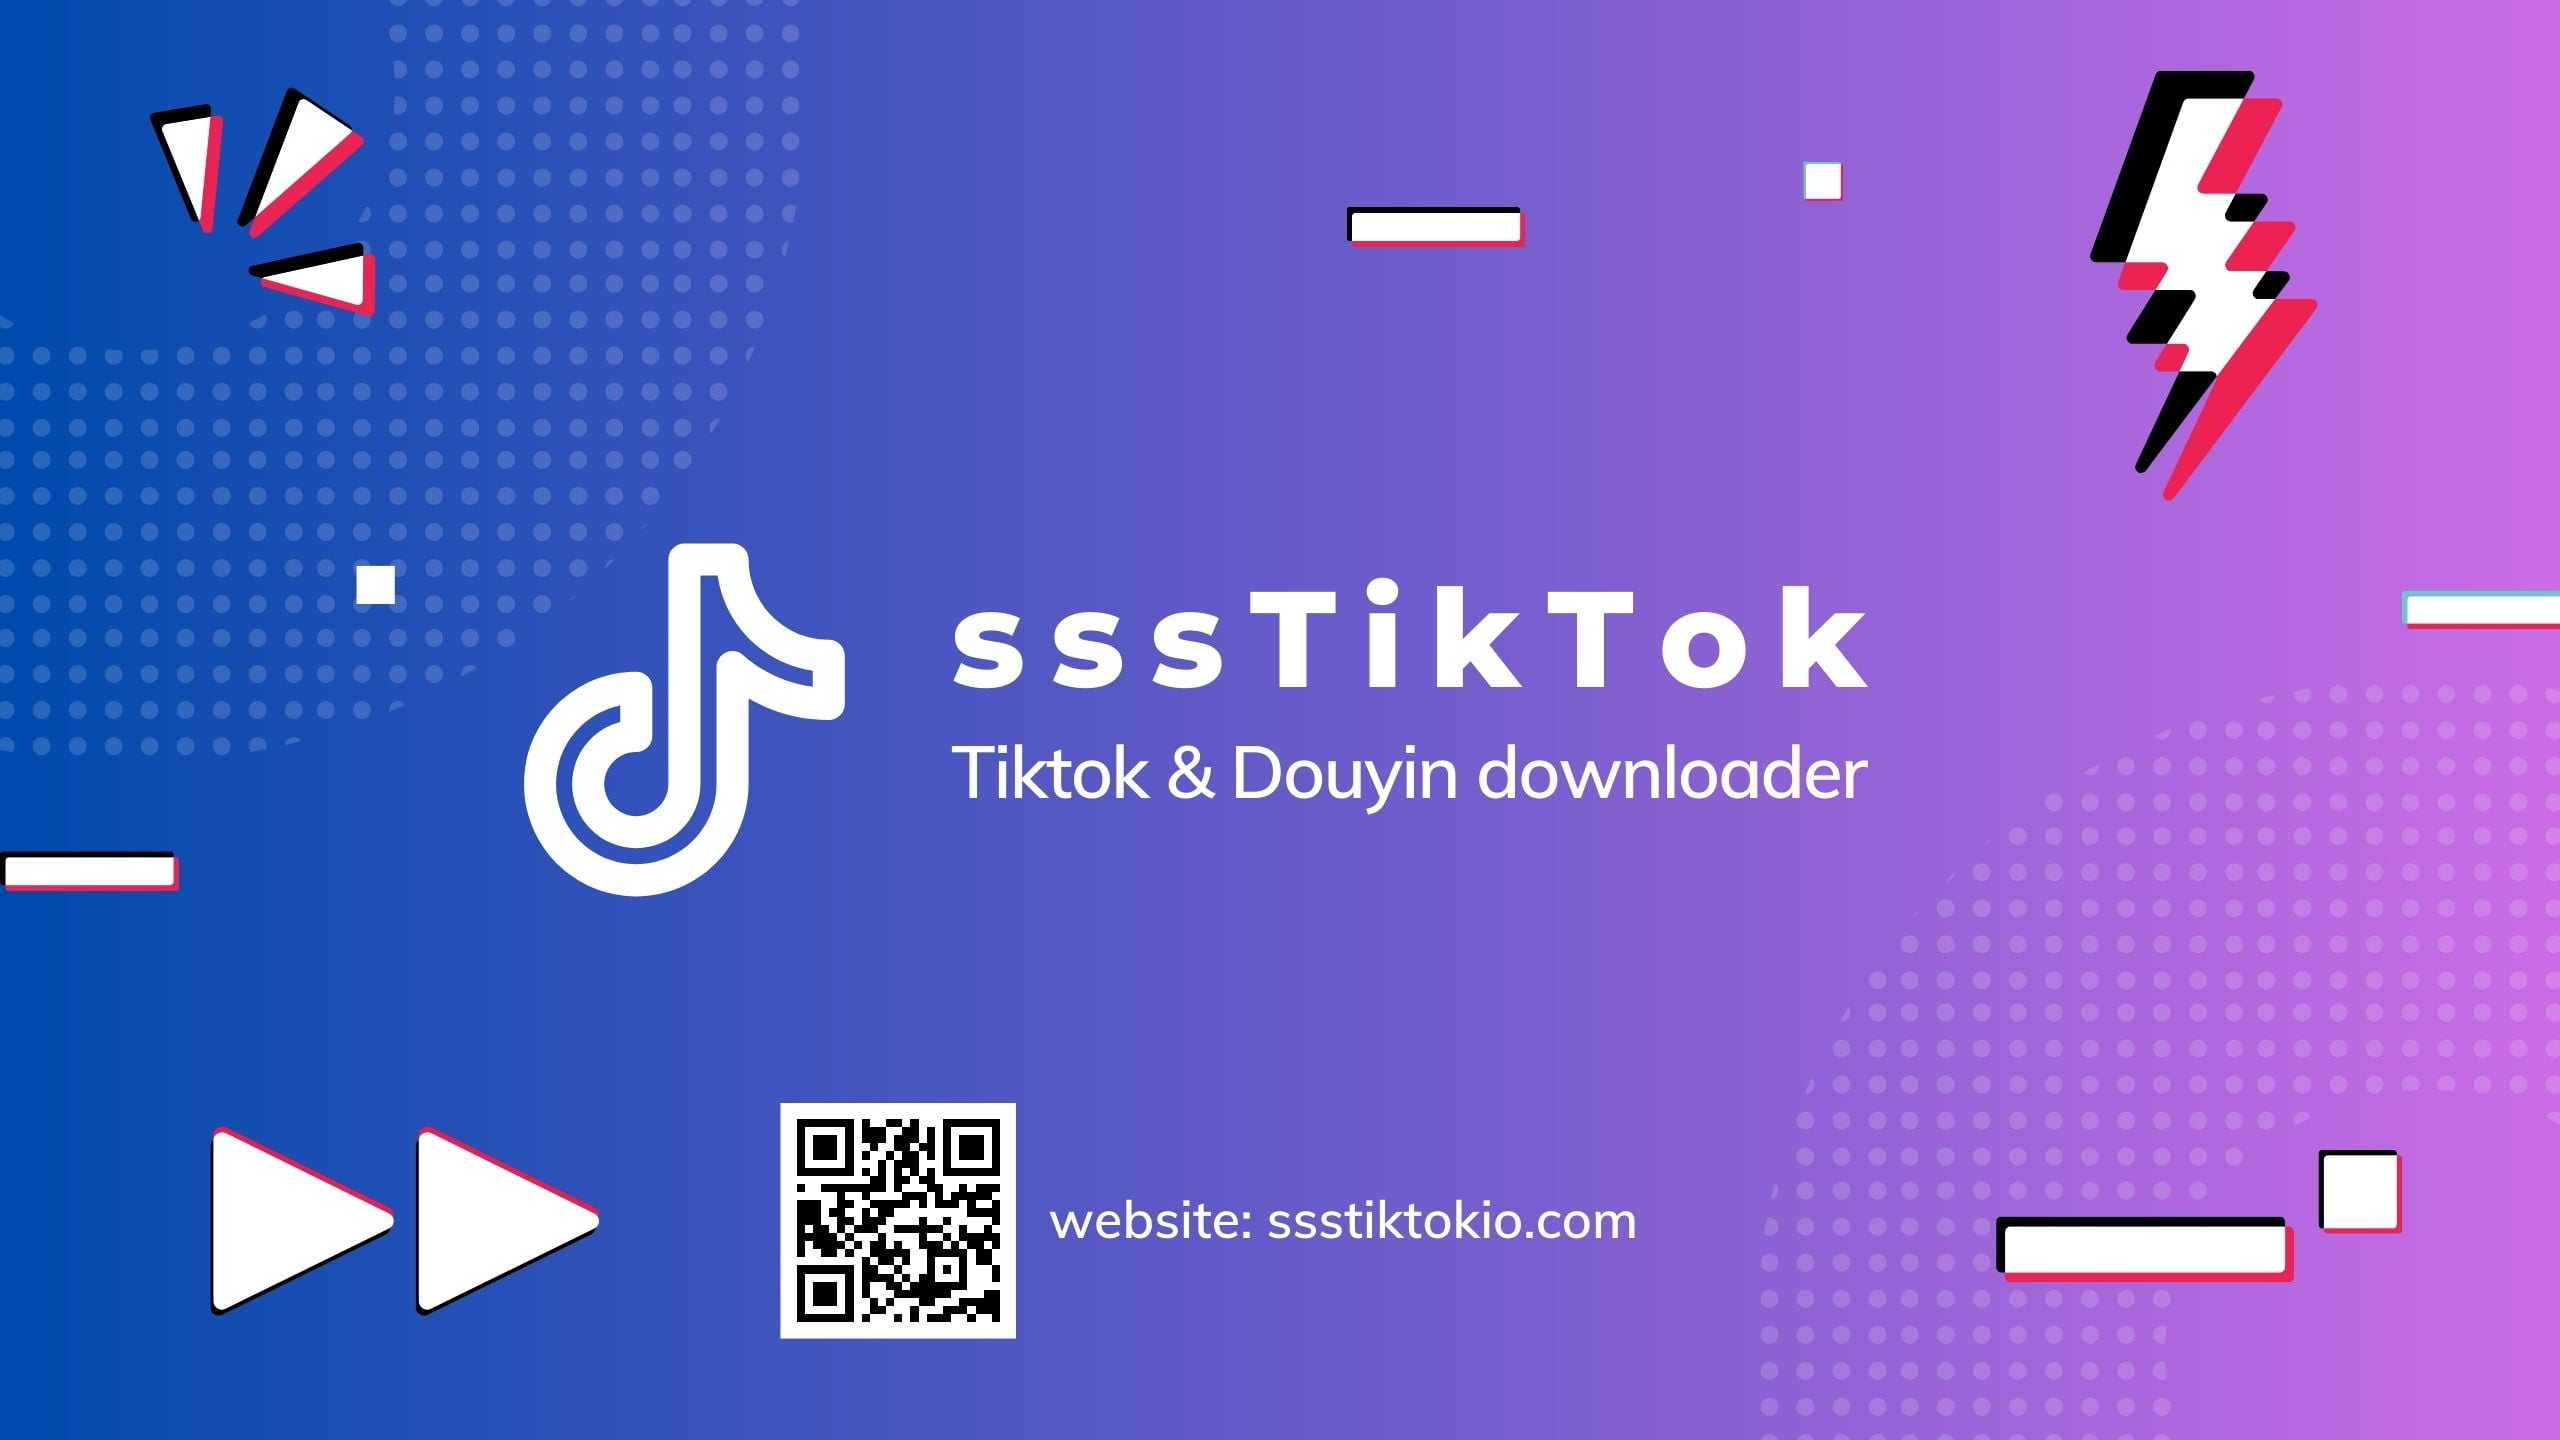 sssTiktok - Gratis online Tiktok downloader